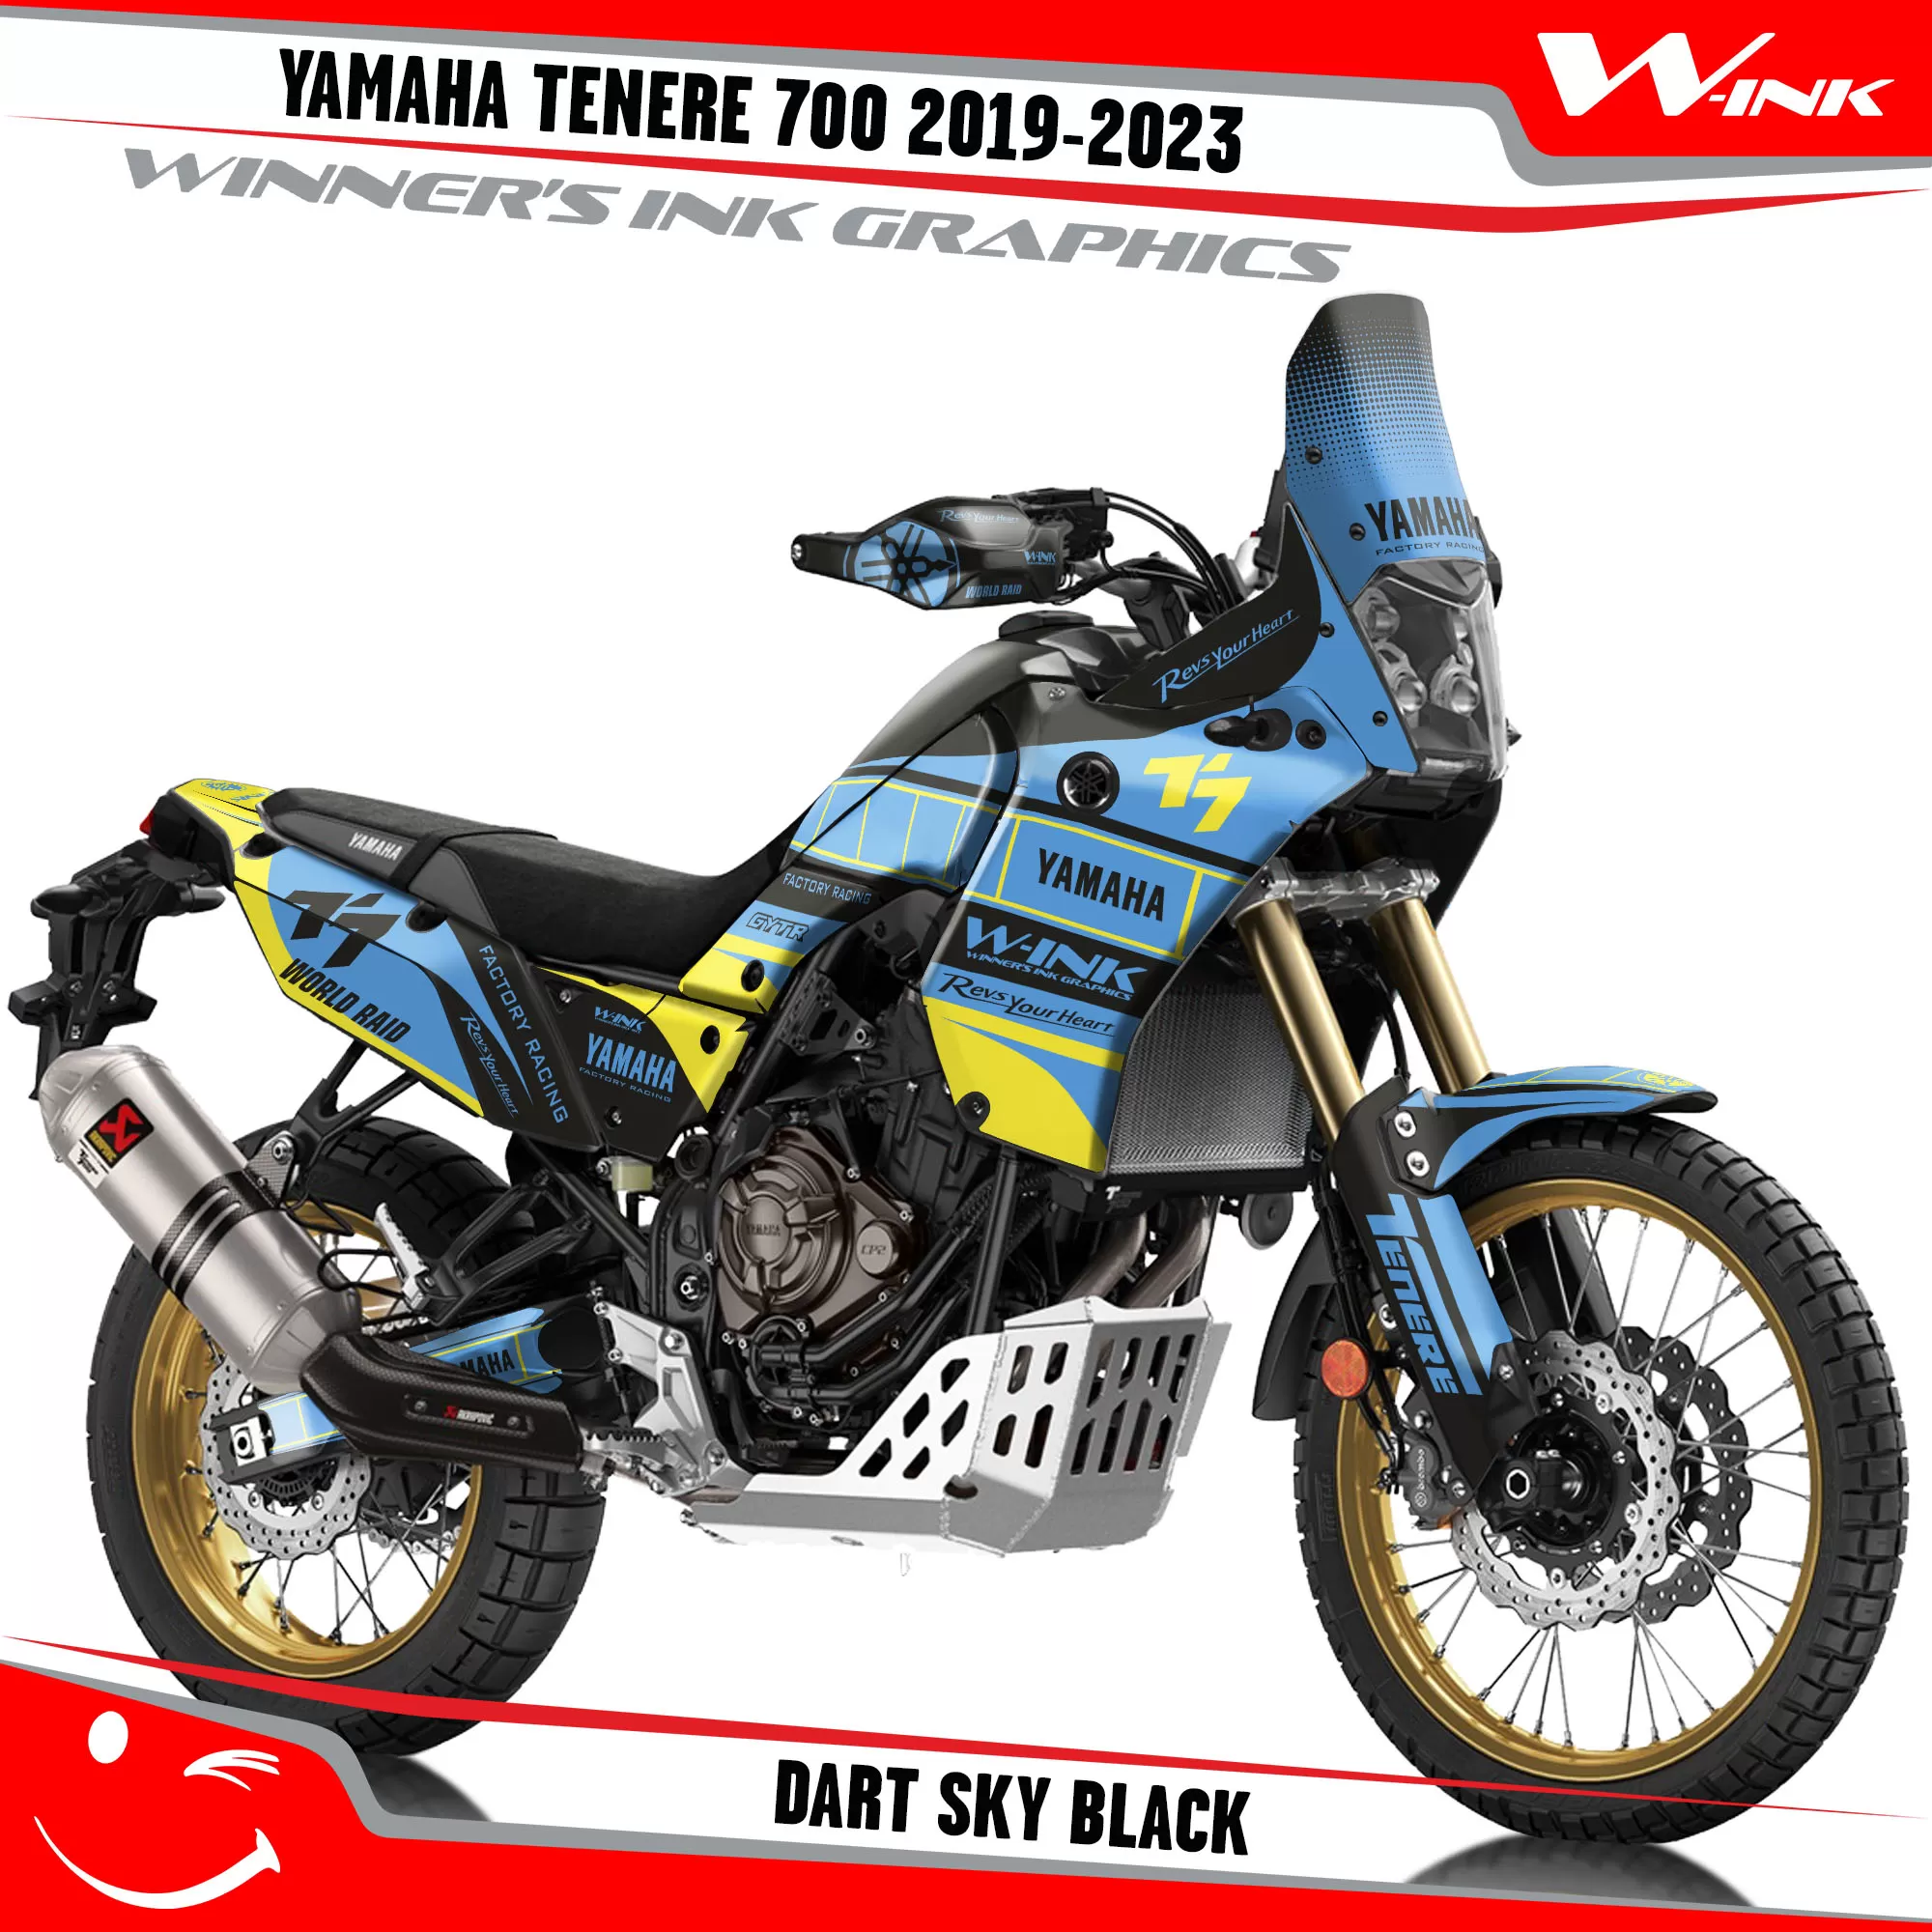 Yamaha-Tenere-700-2019-2020-2021-2022-2023-graphics-kit-and-decals-with-desing-Dart-Sky-Black